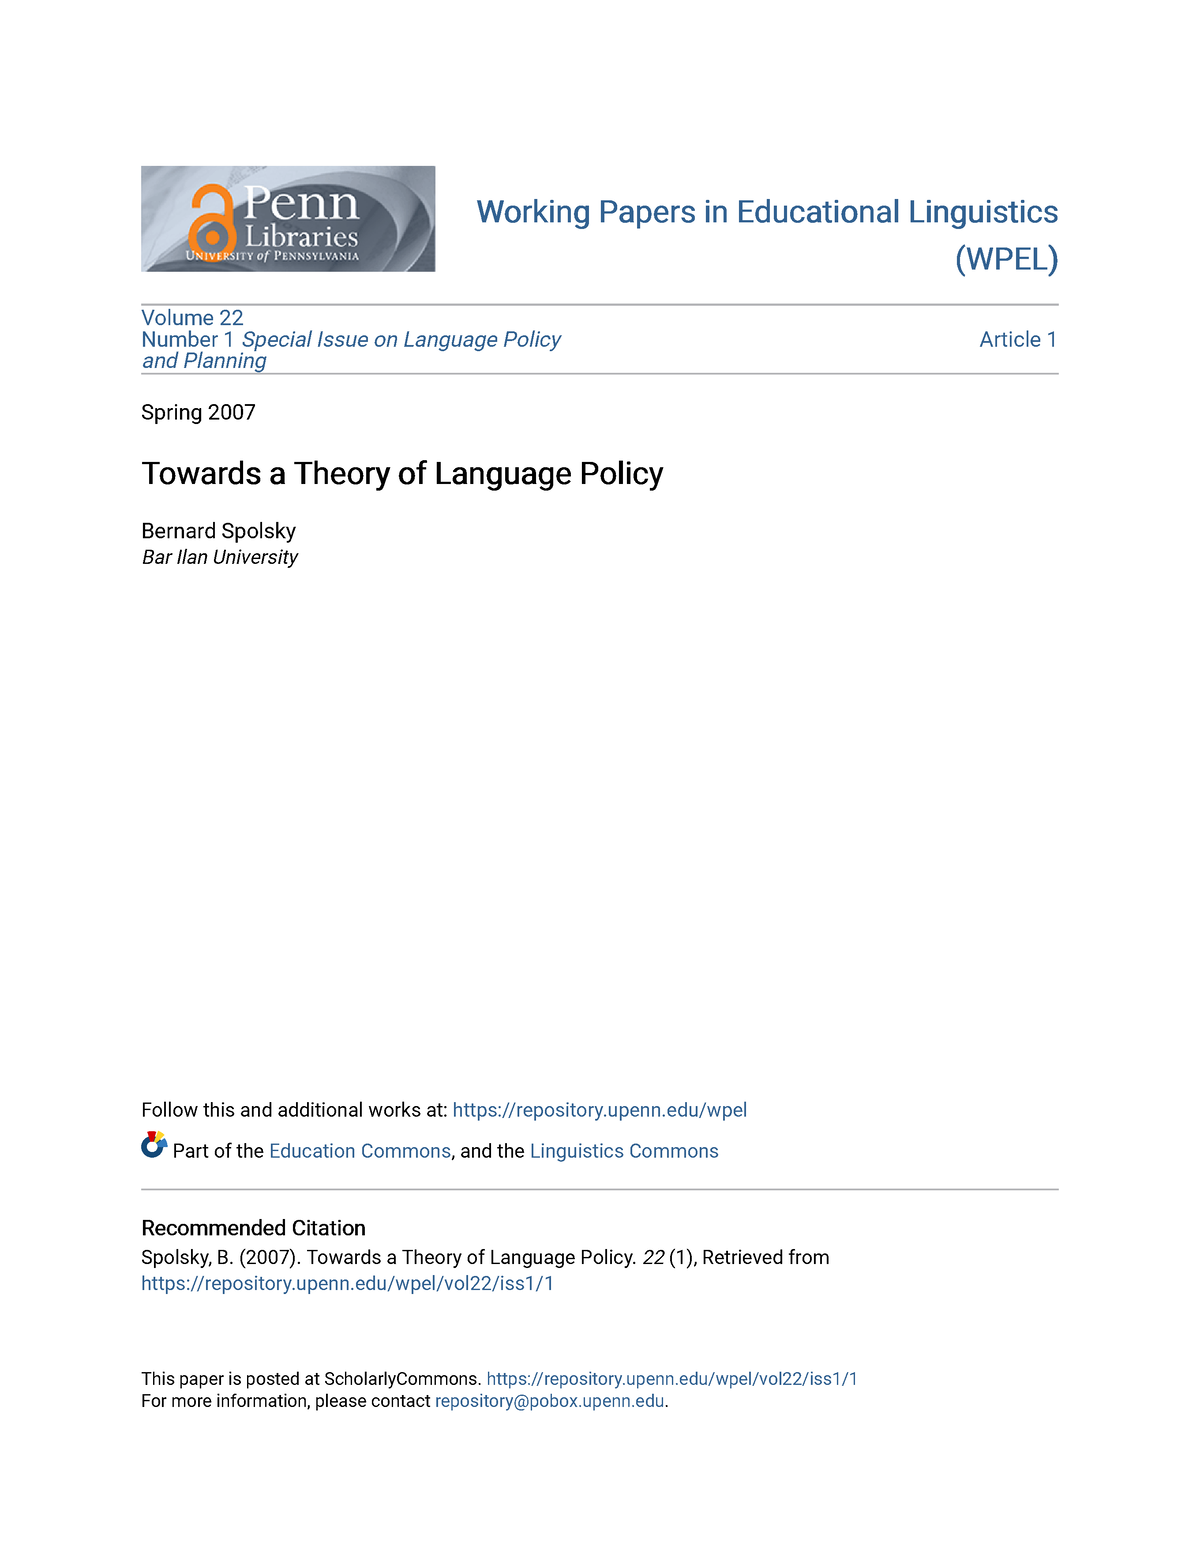 educational linguistics thesis